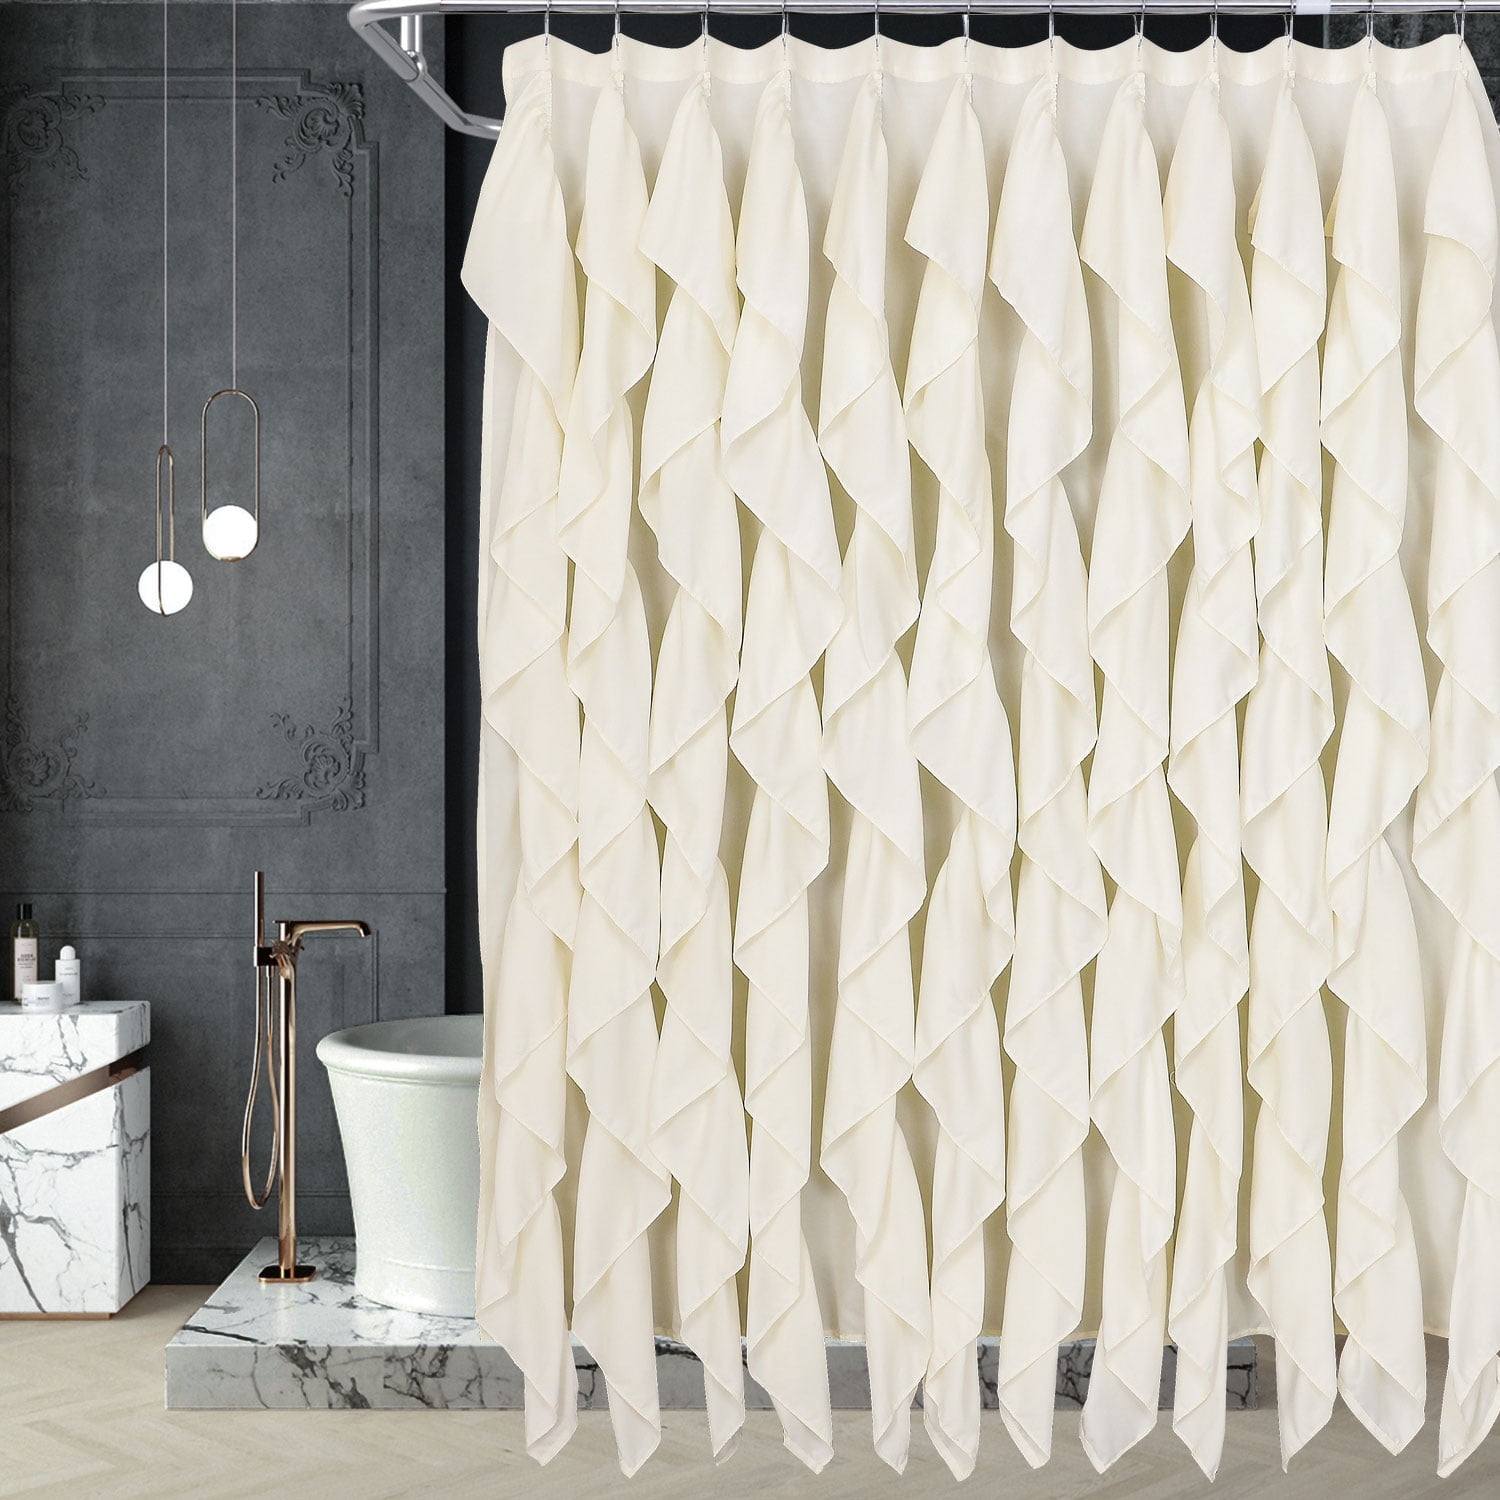  Hotel Balfour Premium Quality Fabric Shower Curtain Luxury  Turkey Modern Home Bathroom Decor Bathtub Privacy Screen Fringe at Bottom  100% Cotton 72 x 72 (Checkered White & Gray) : Home 